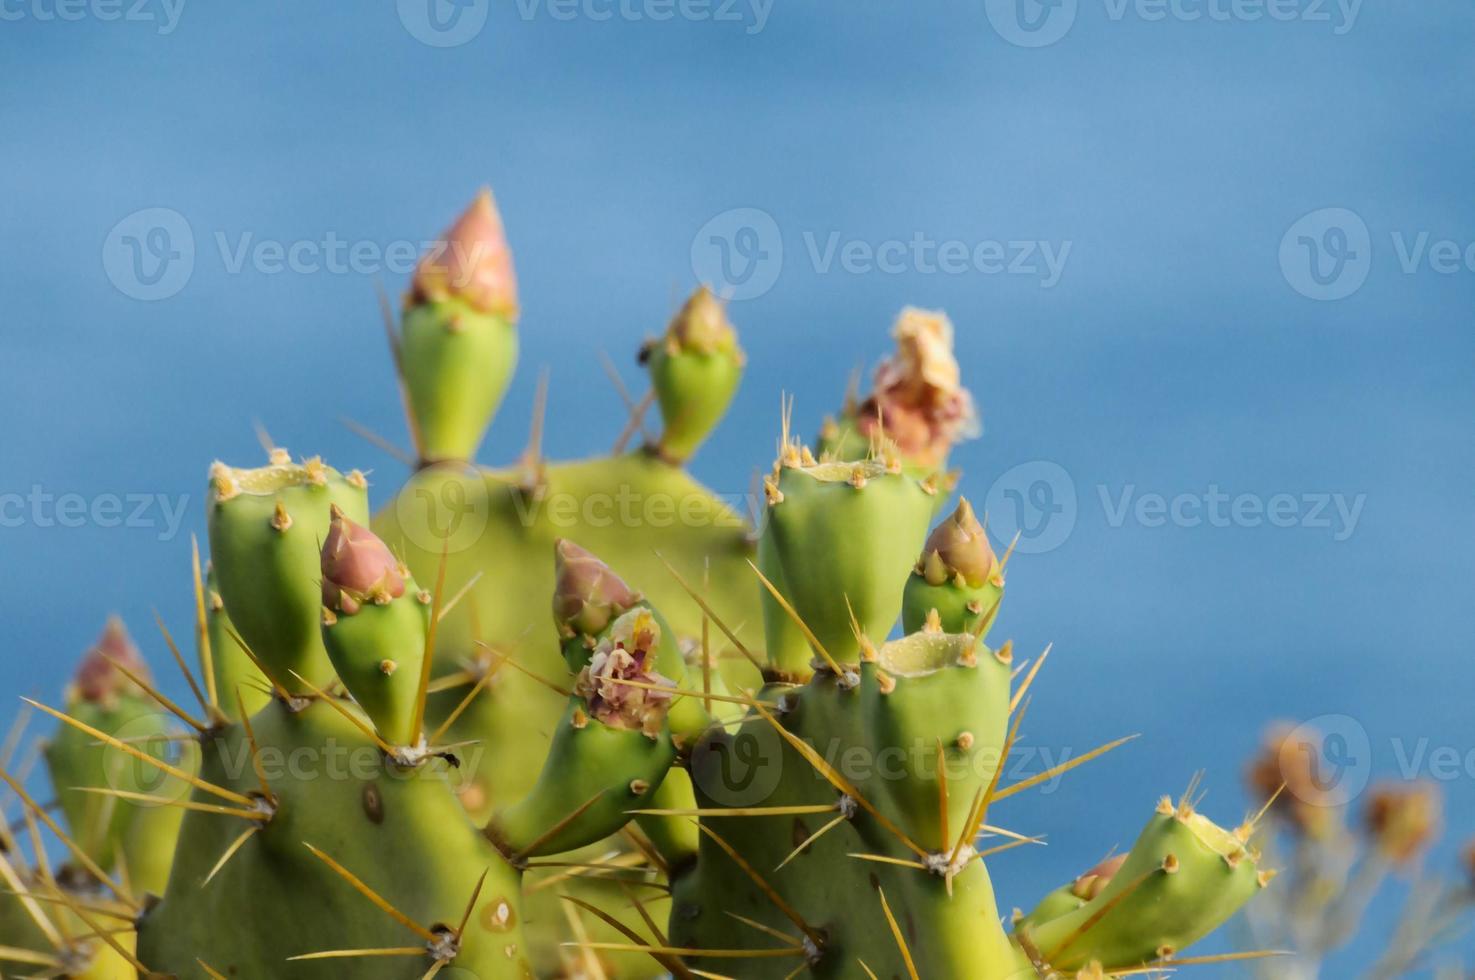 Cactus close-up view photo